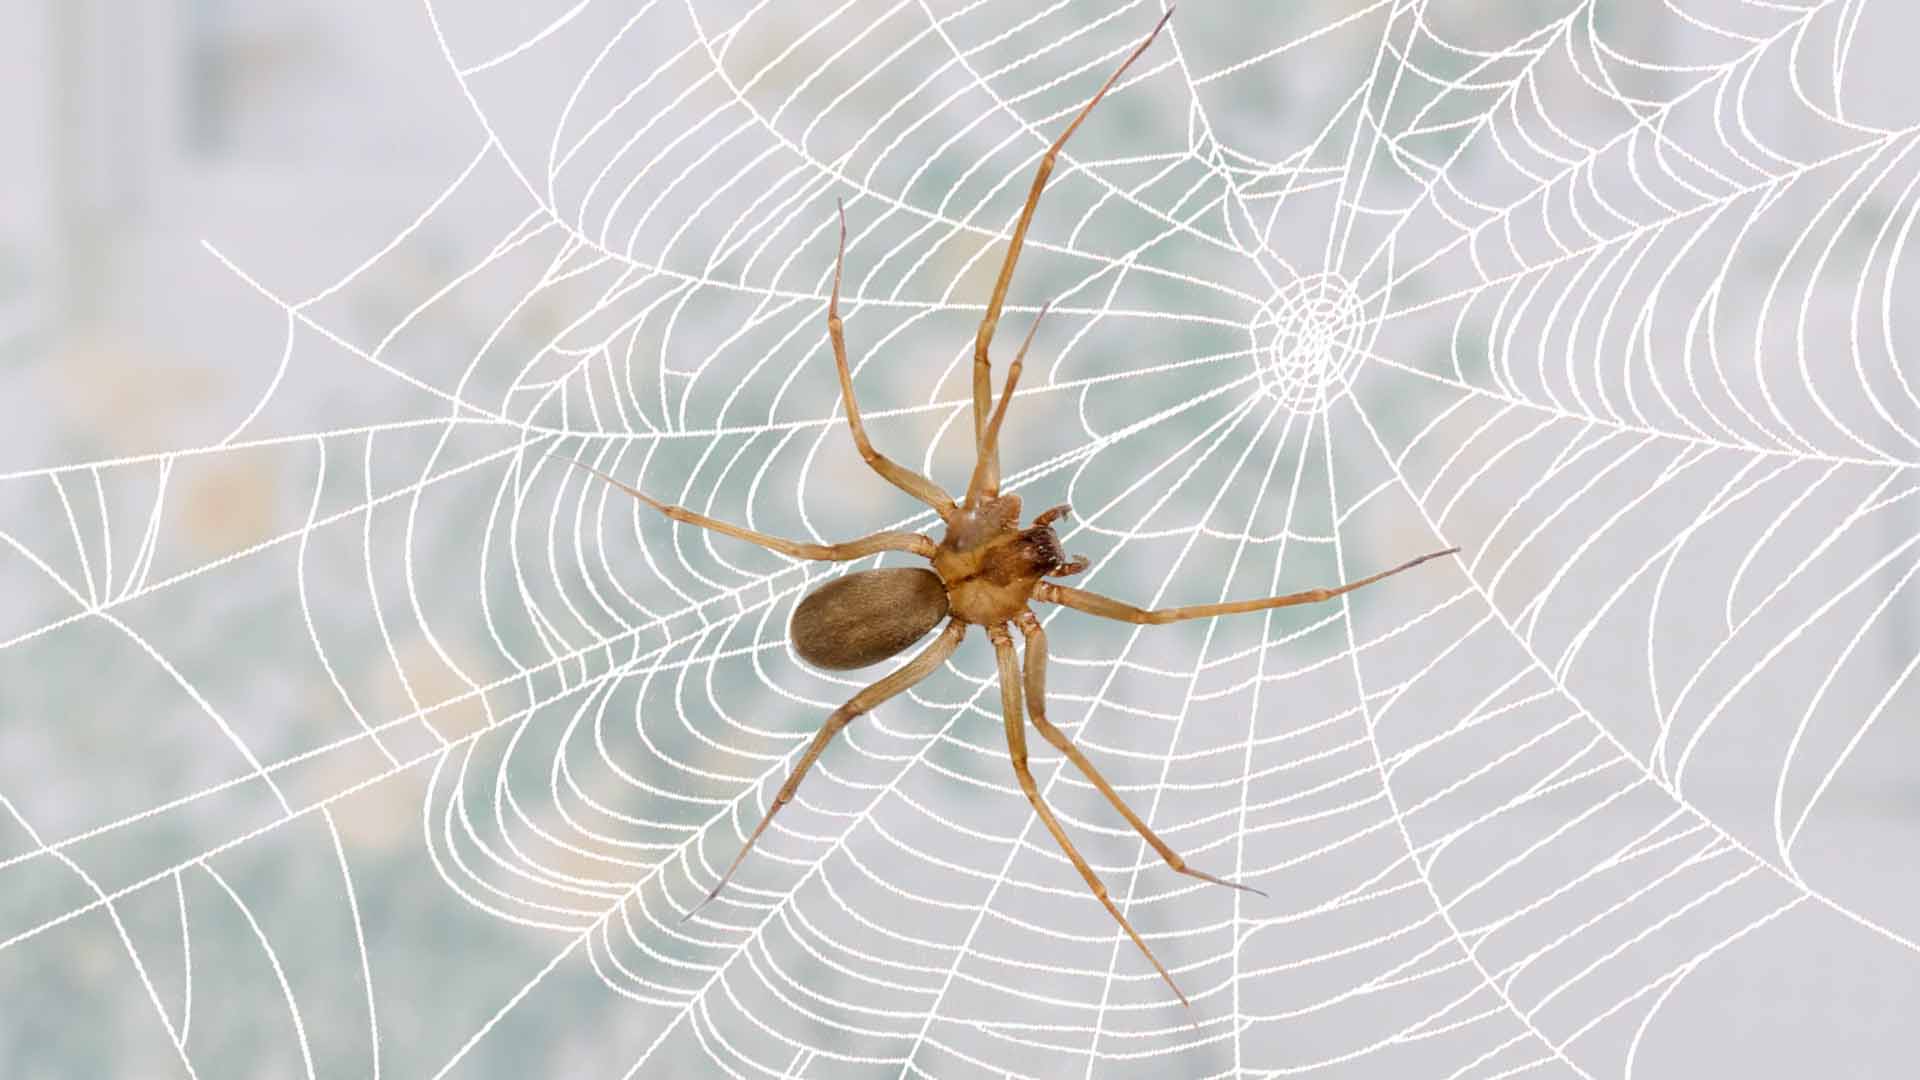 Are brown recluse spiders aggressive